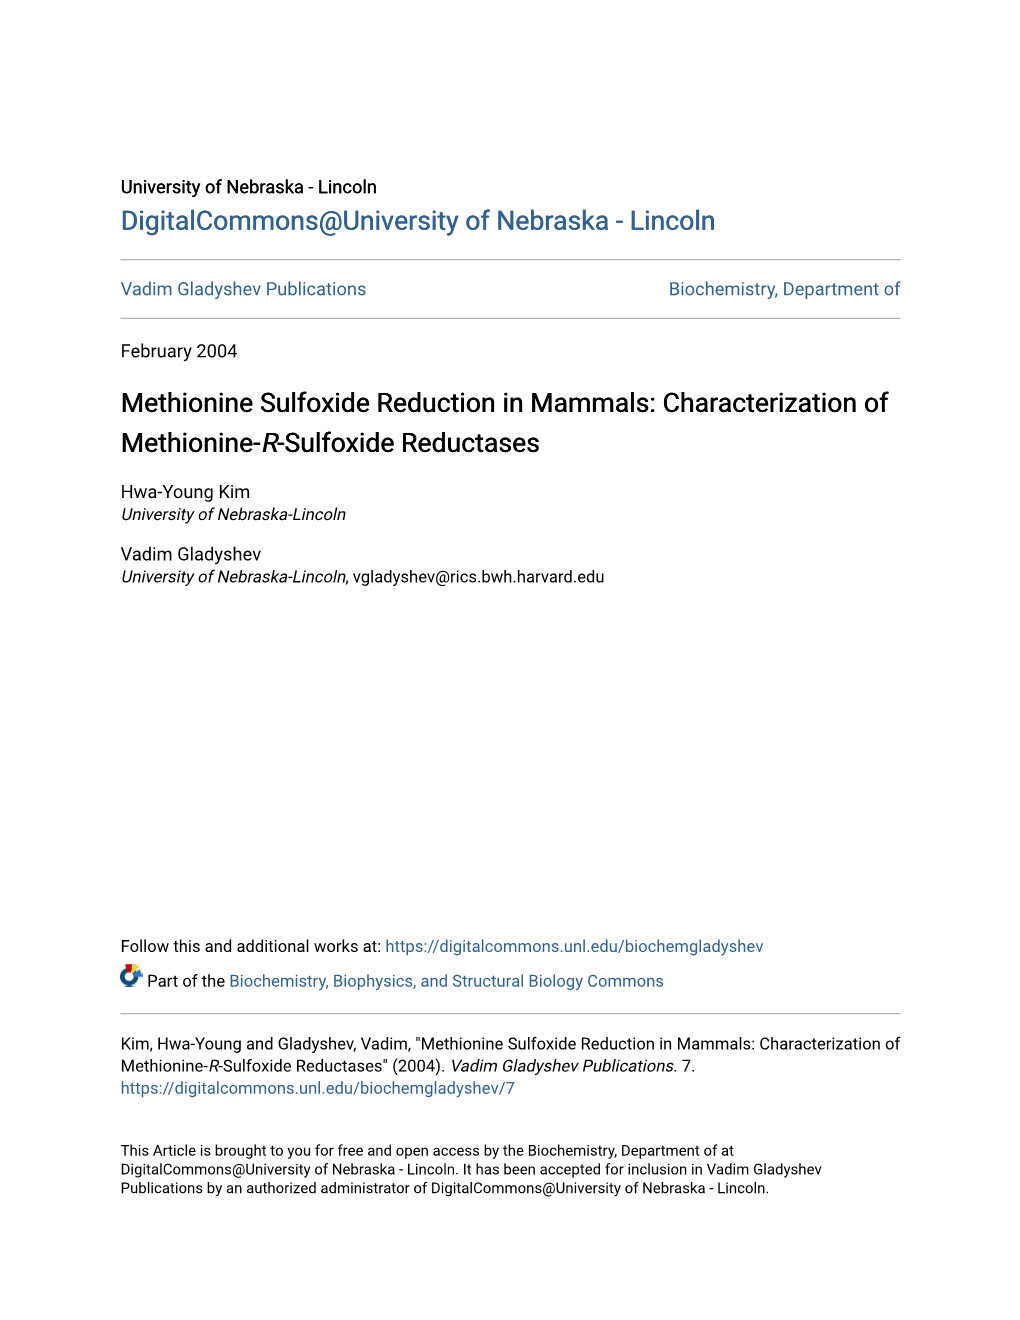 Methionine Sulfoxide Reduction in Mammals: Characterization of Methionine-R-Sulfoxide Reductases